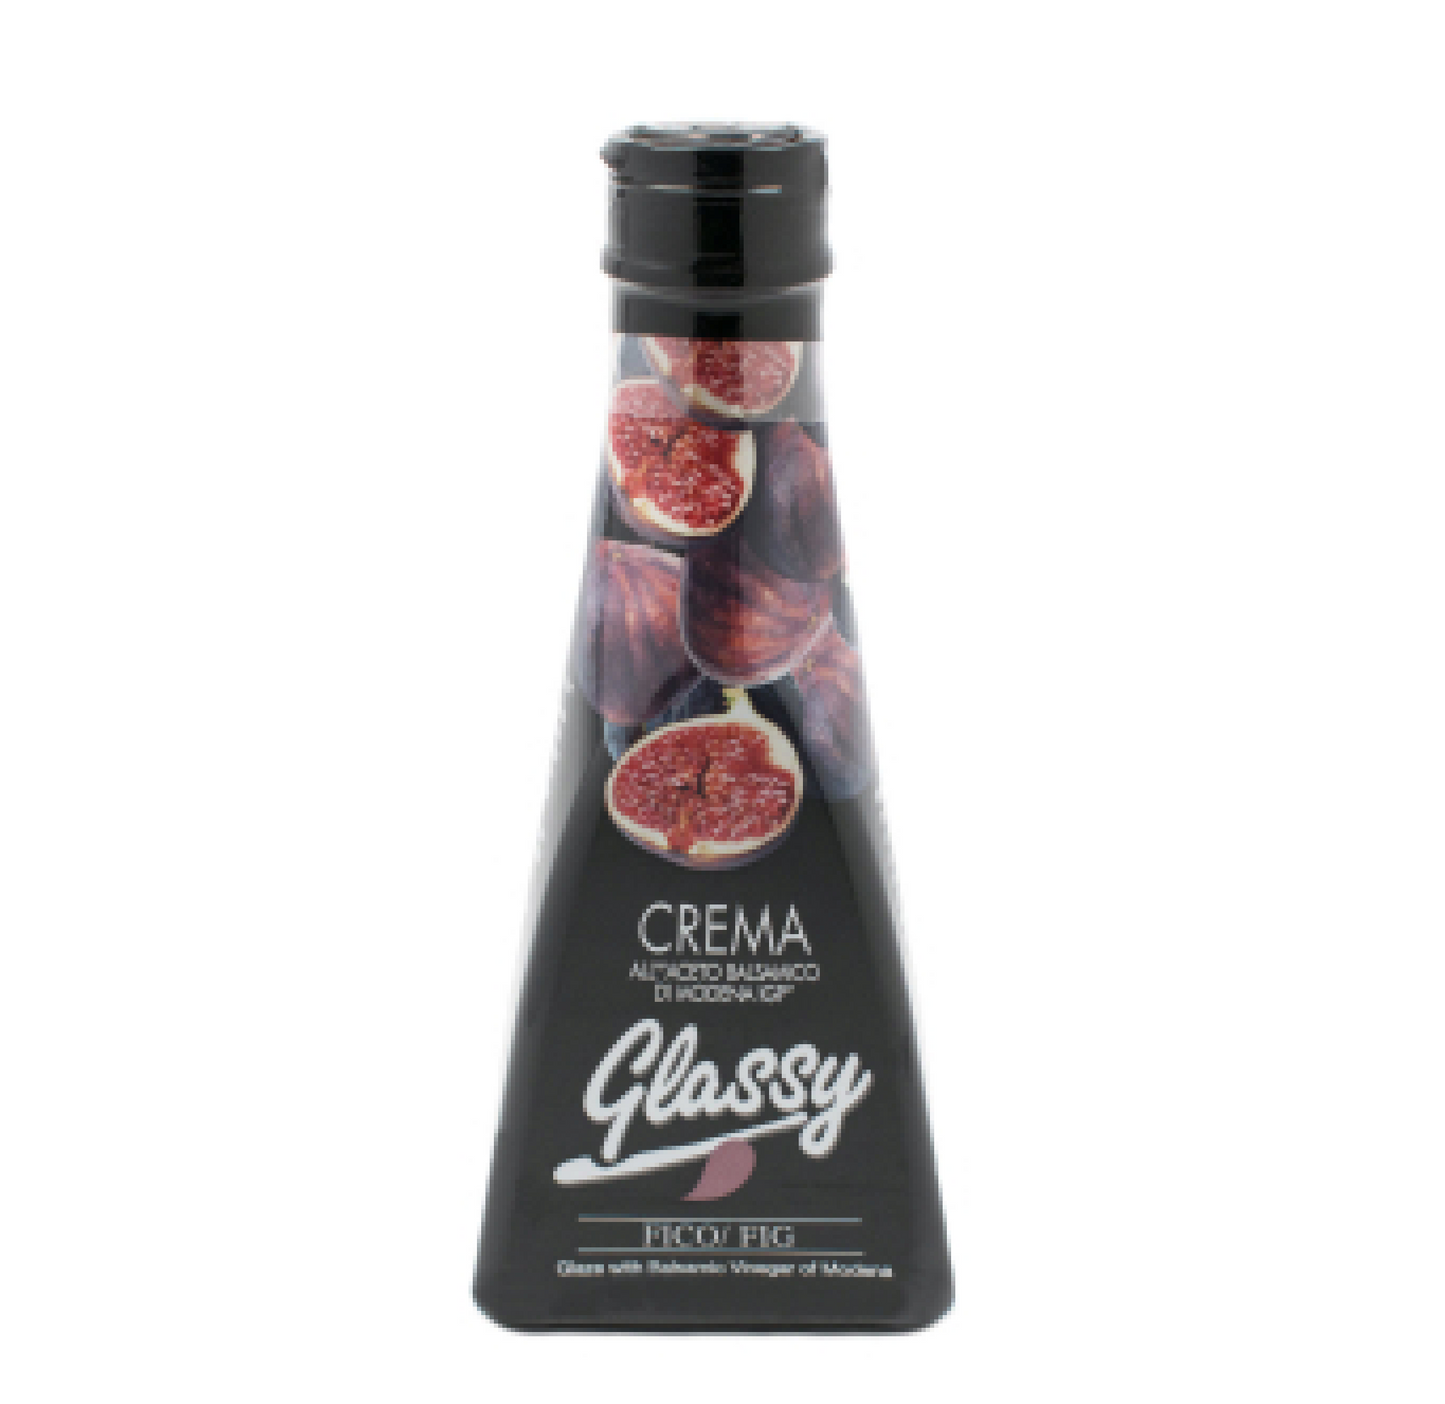 Crema Glassy Fig: Glaze with Balsamic Vinegar of Modena 250ml